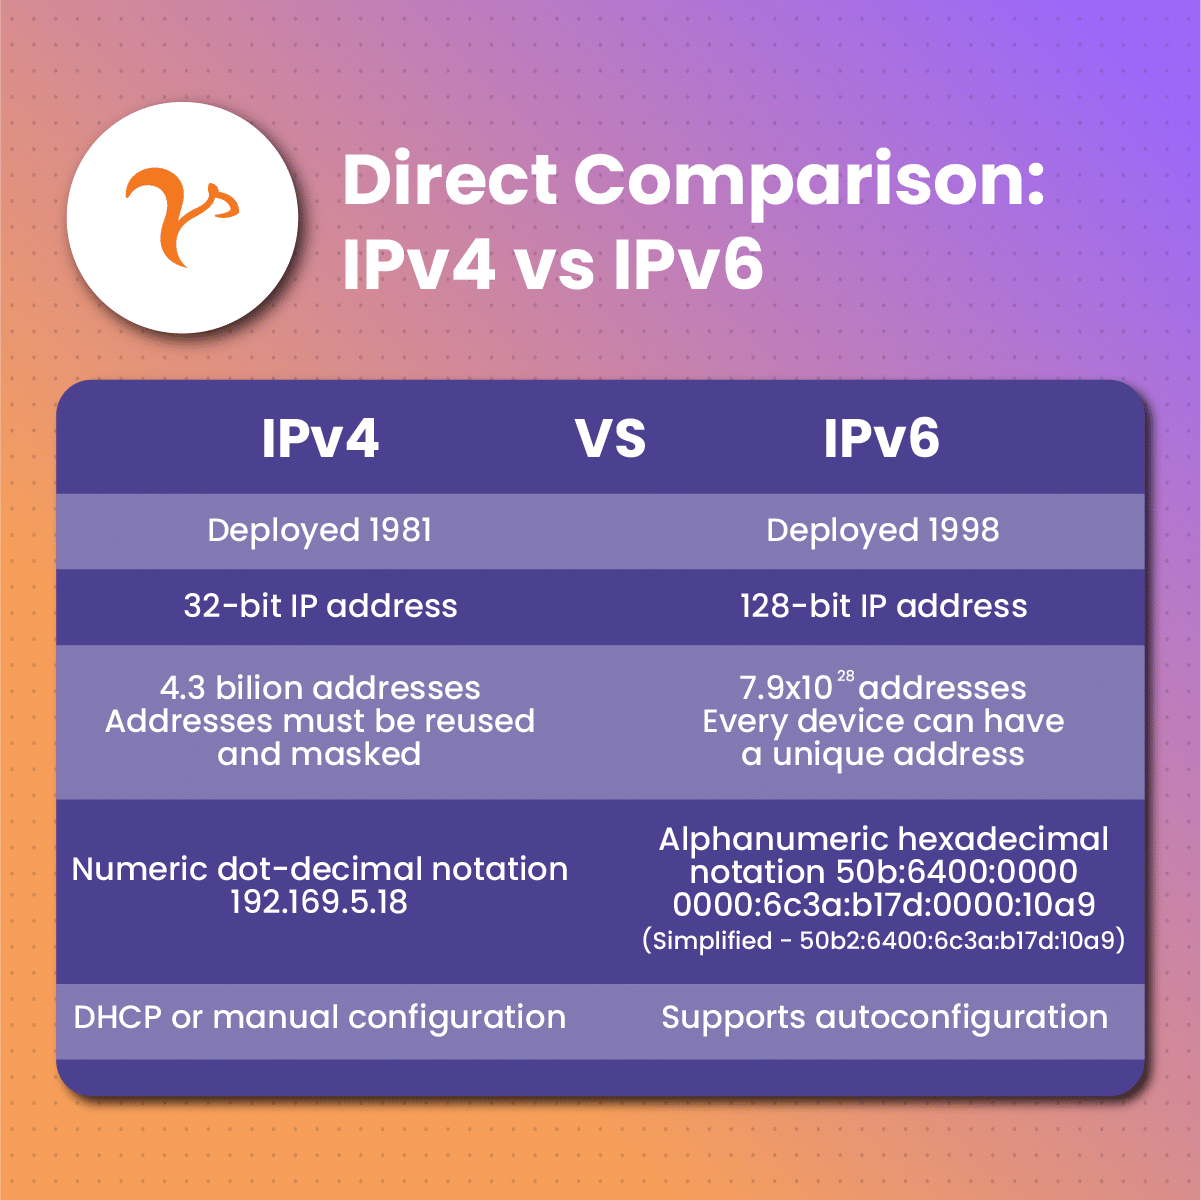 Direct Comparison: IPv4 vs IPv6